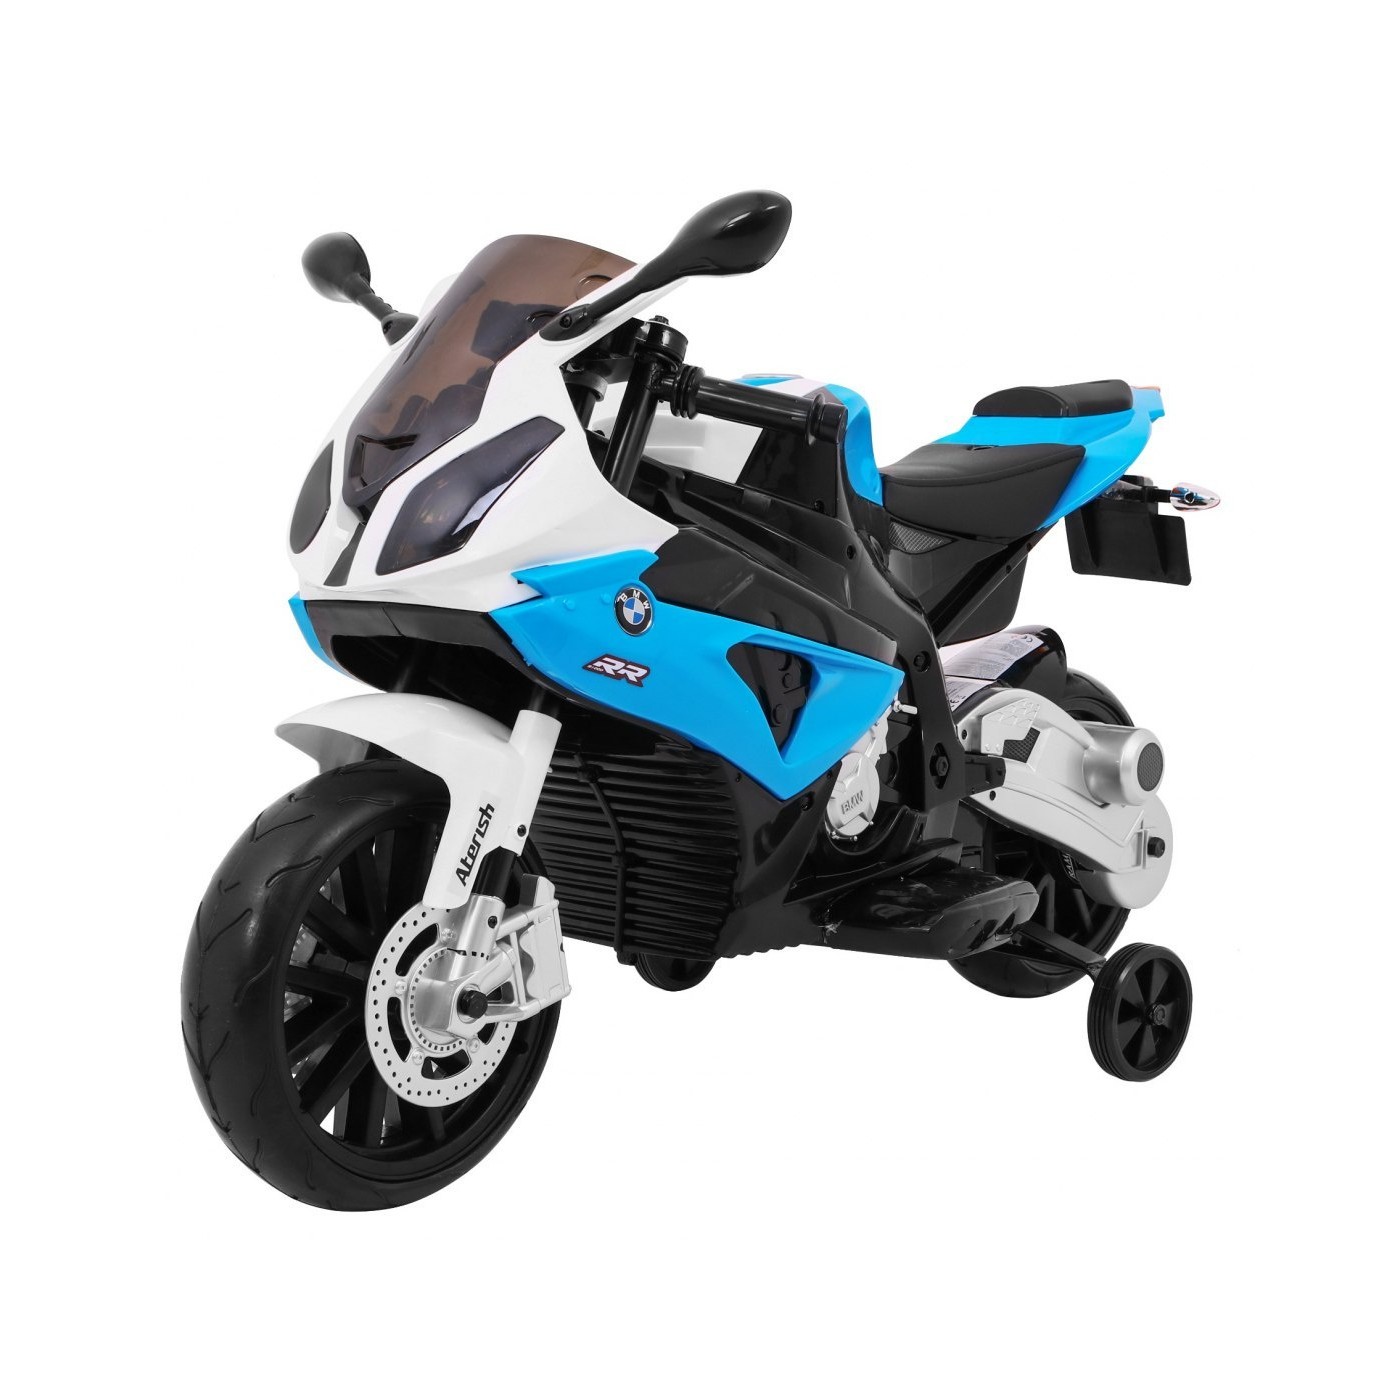  Dětská elektrická motorka BMW S1000RR Maxi modrá